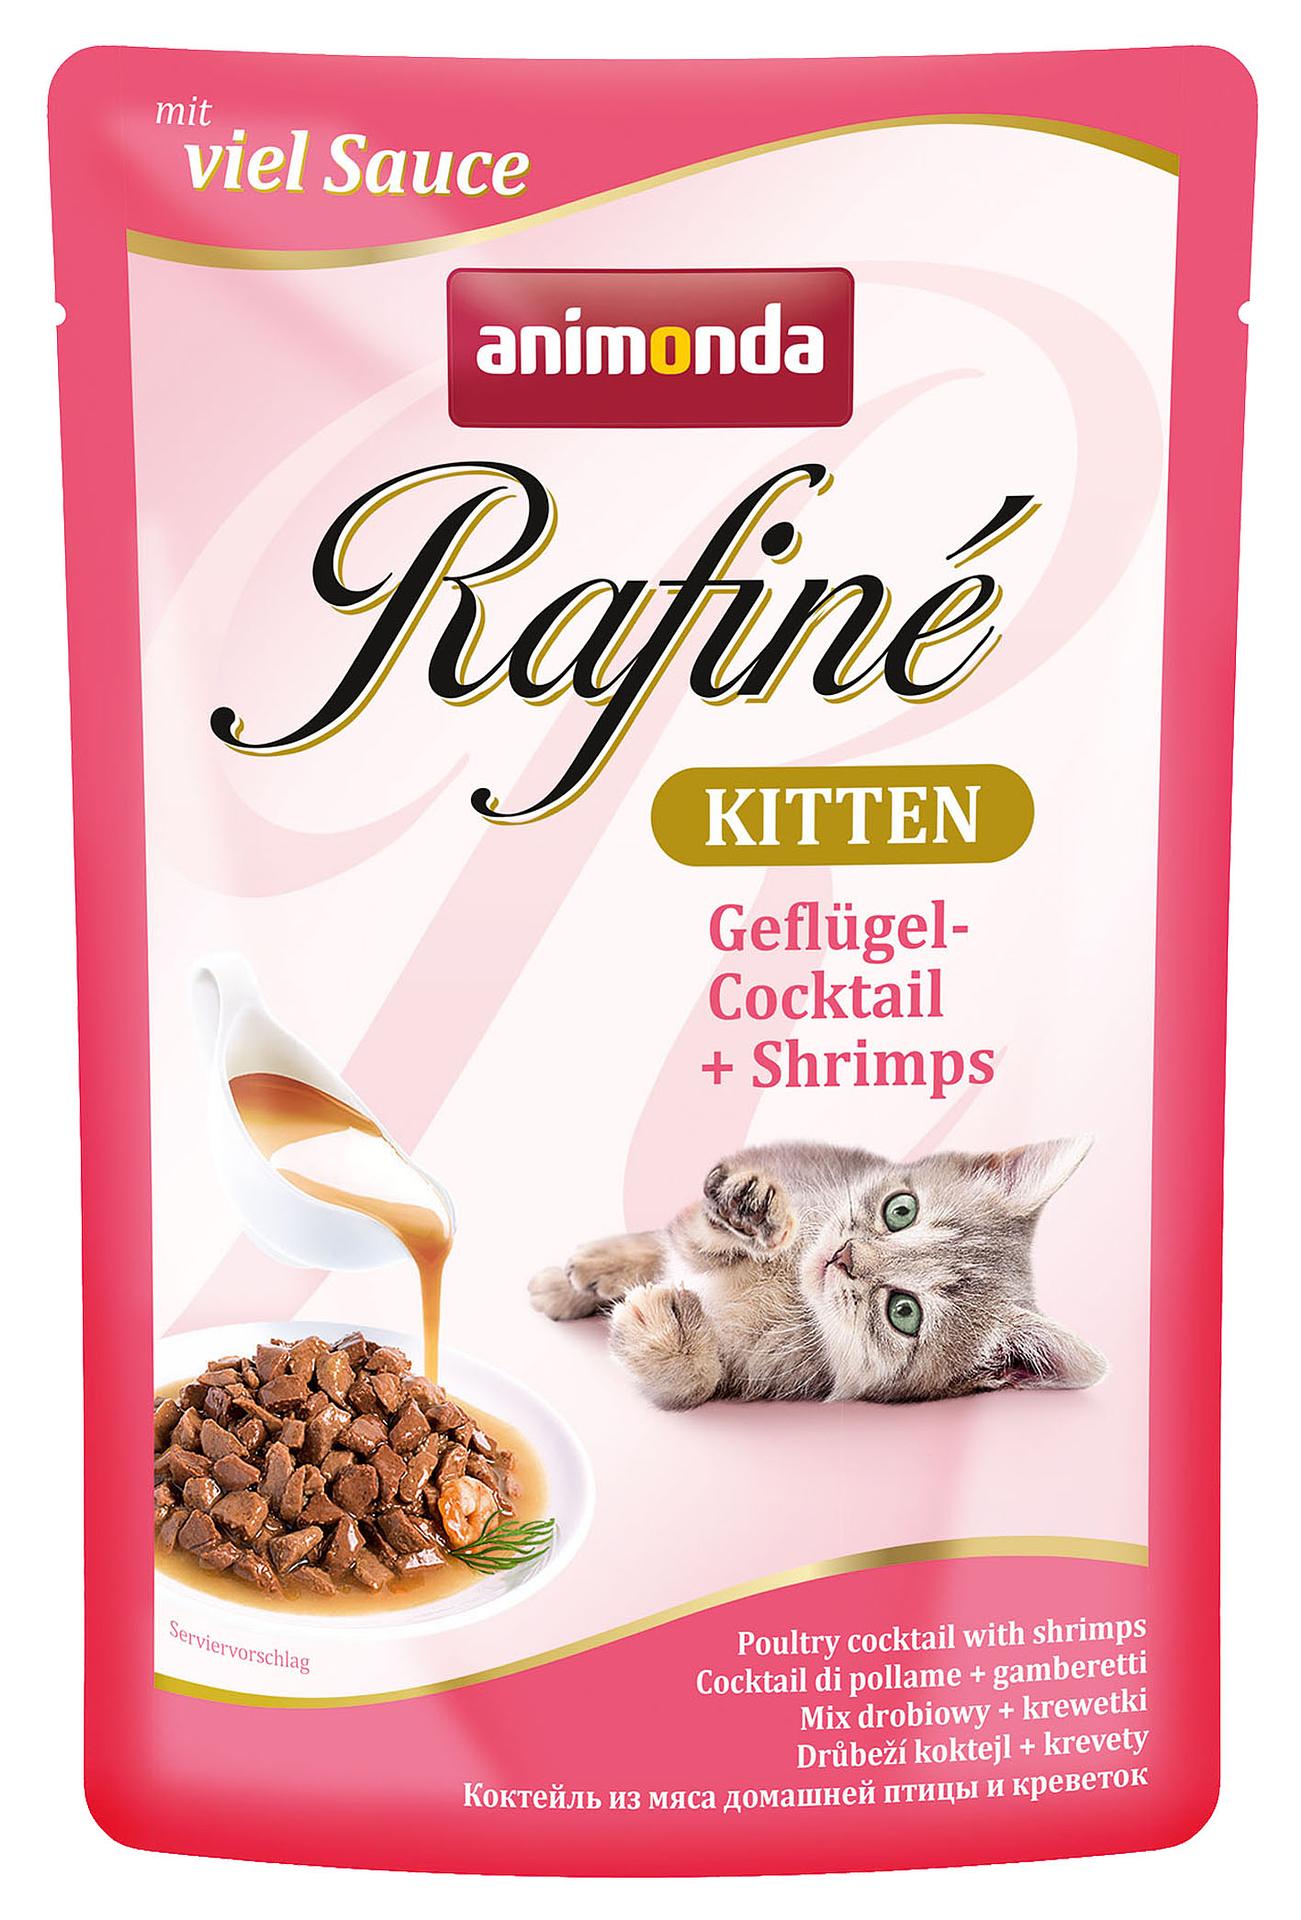 Rafiné Soupé KITTEN Geflügel + Shrimps 100g